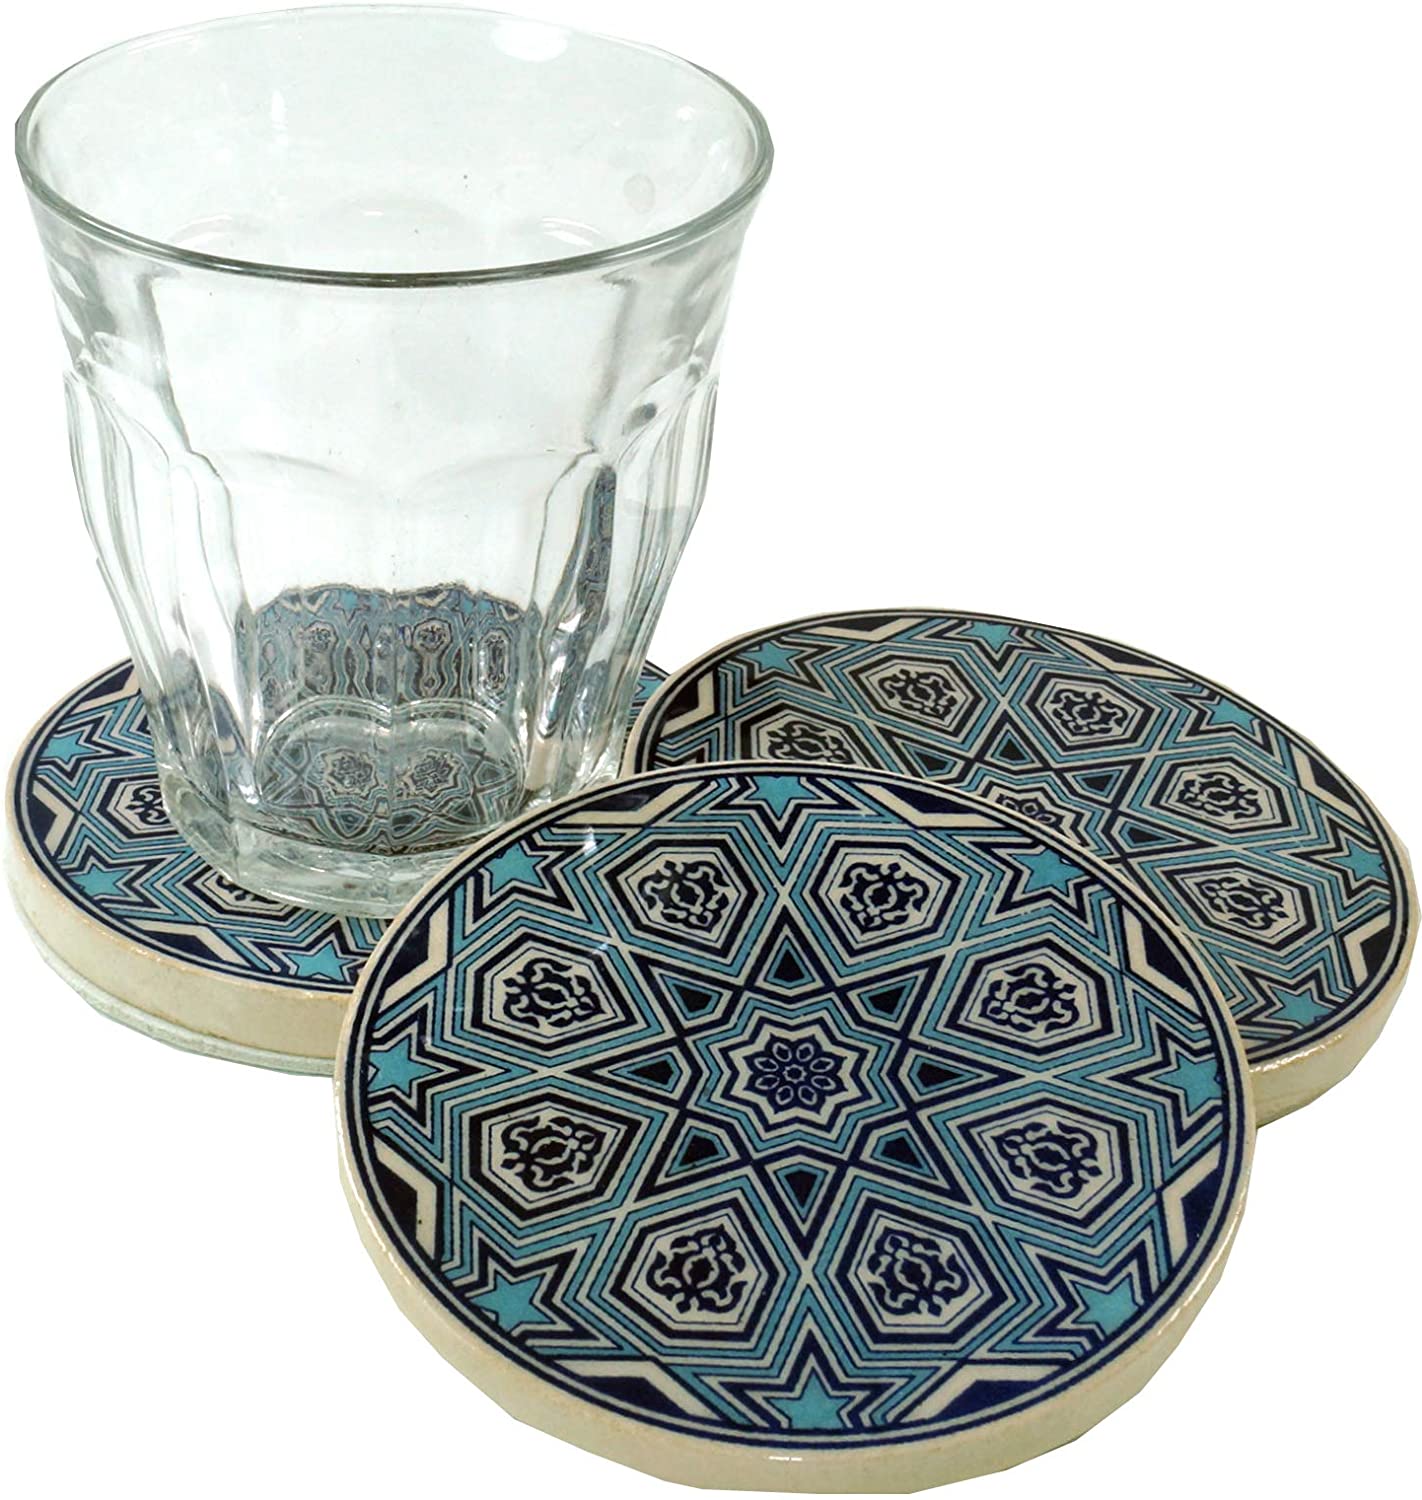 Guru-Shop GURU SHOP Oriental Ceramic Coasters, Round Coasters for Glasses, Mugs with Mandala Motif Set - Pattern 3, Blue, Quantity: Set of 3, Coasters, Trays